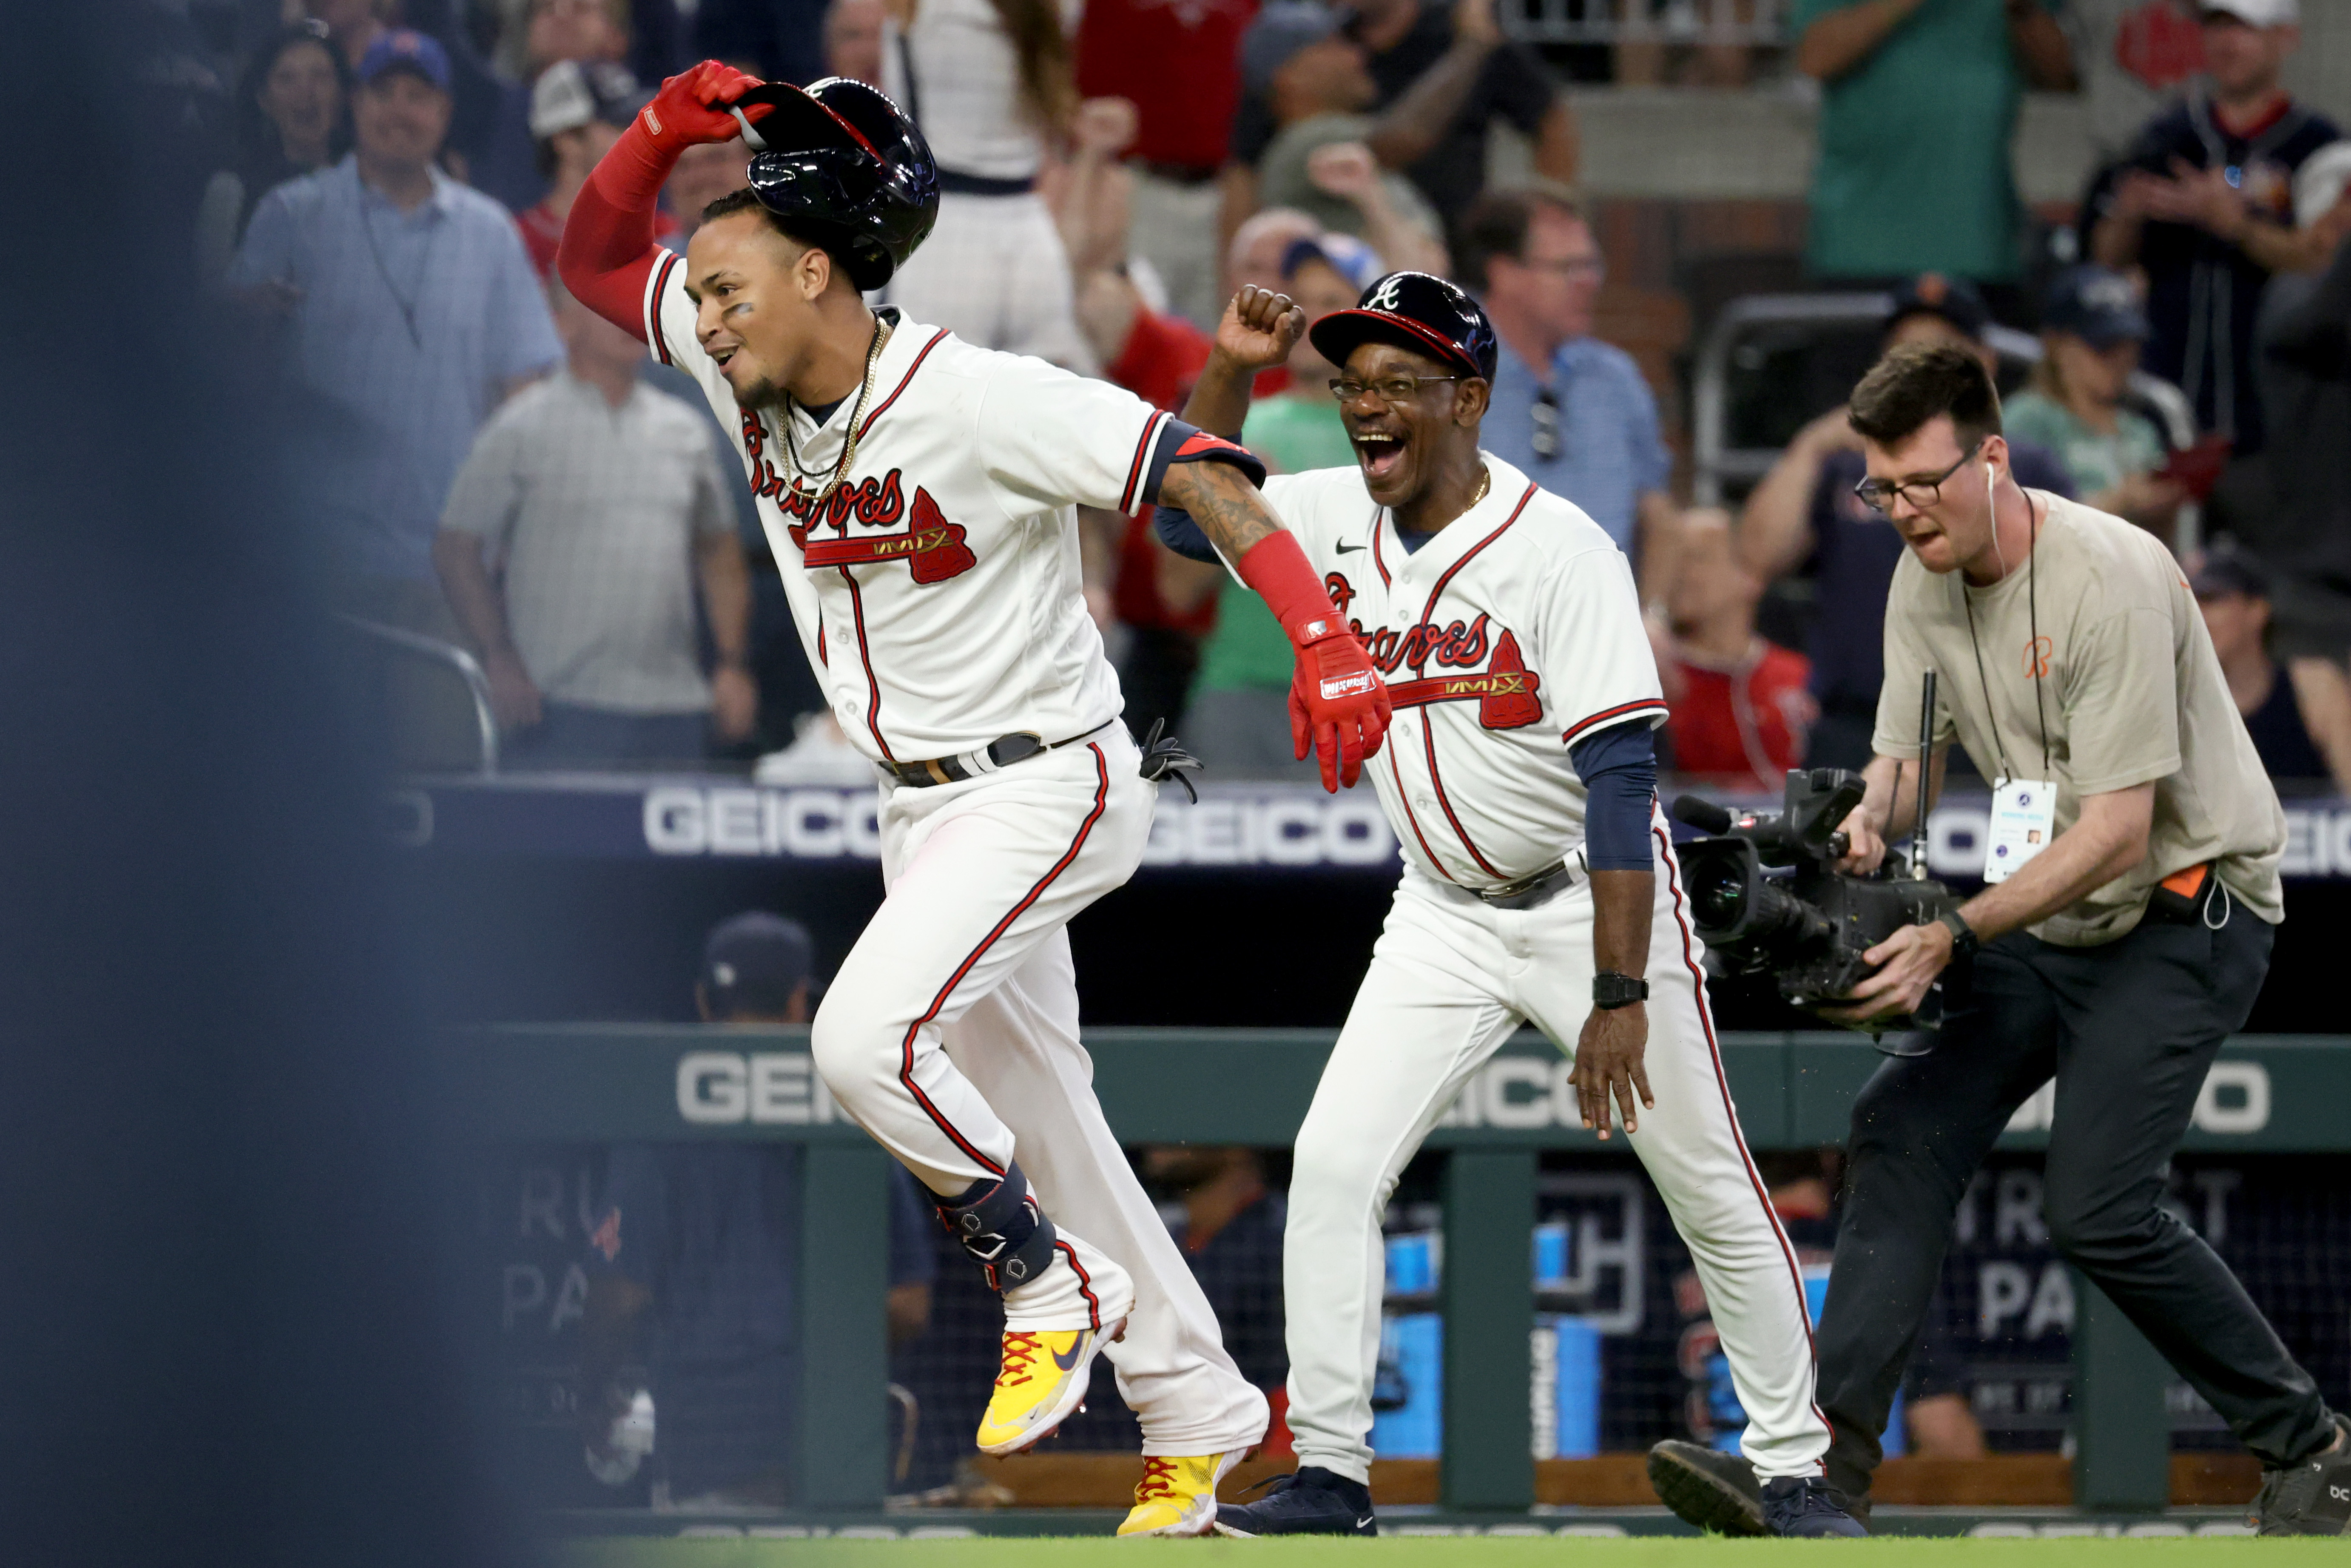 Orlando Arcia's walk-off homer propels Braves past Red Sox